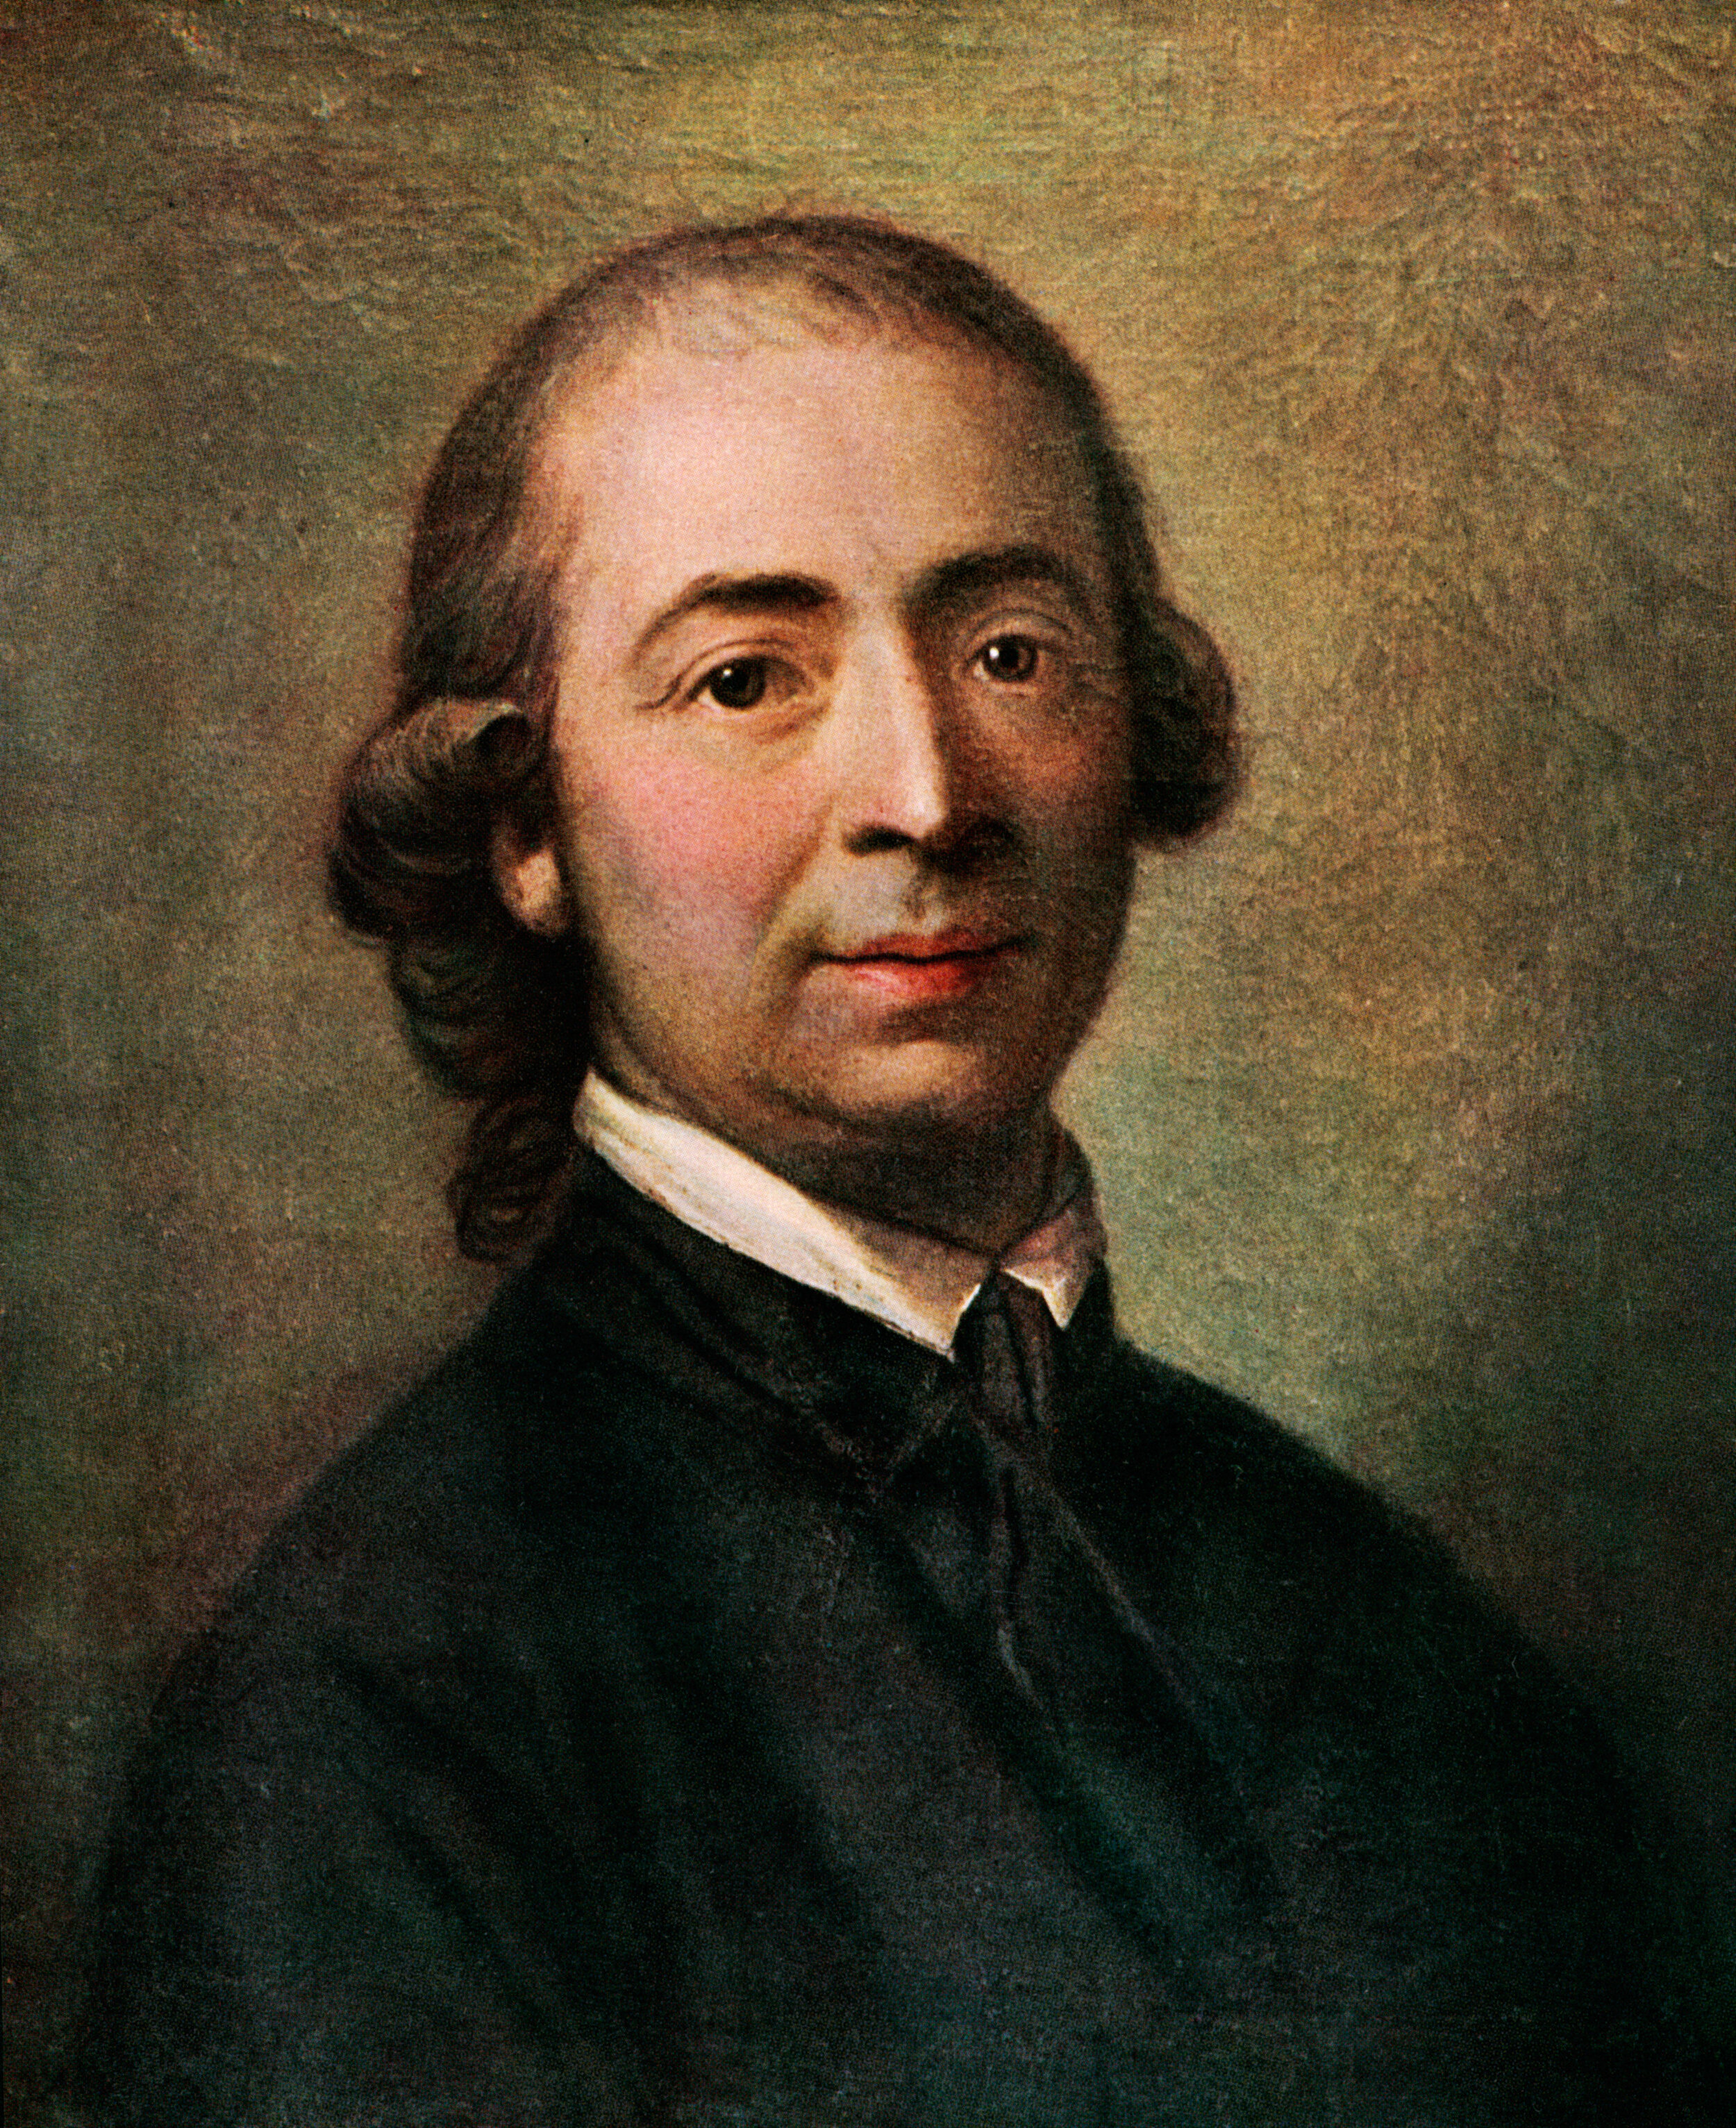 Johann Gottfried Herder 1744-1803